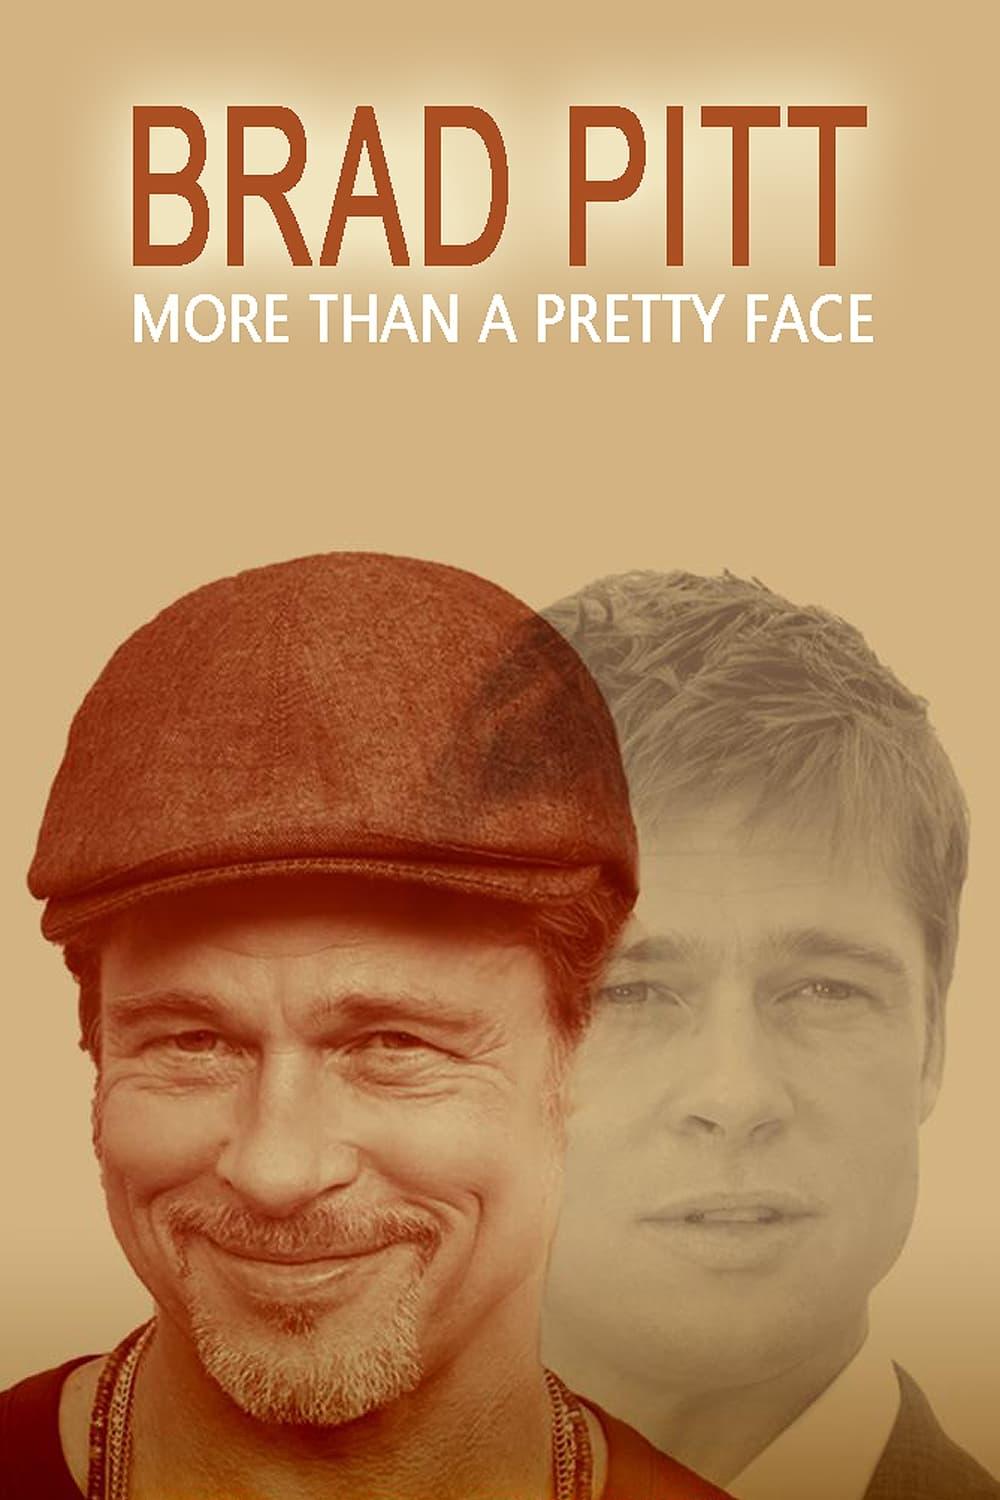 Brad Pitt: More Than a Pretty Face poster